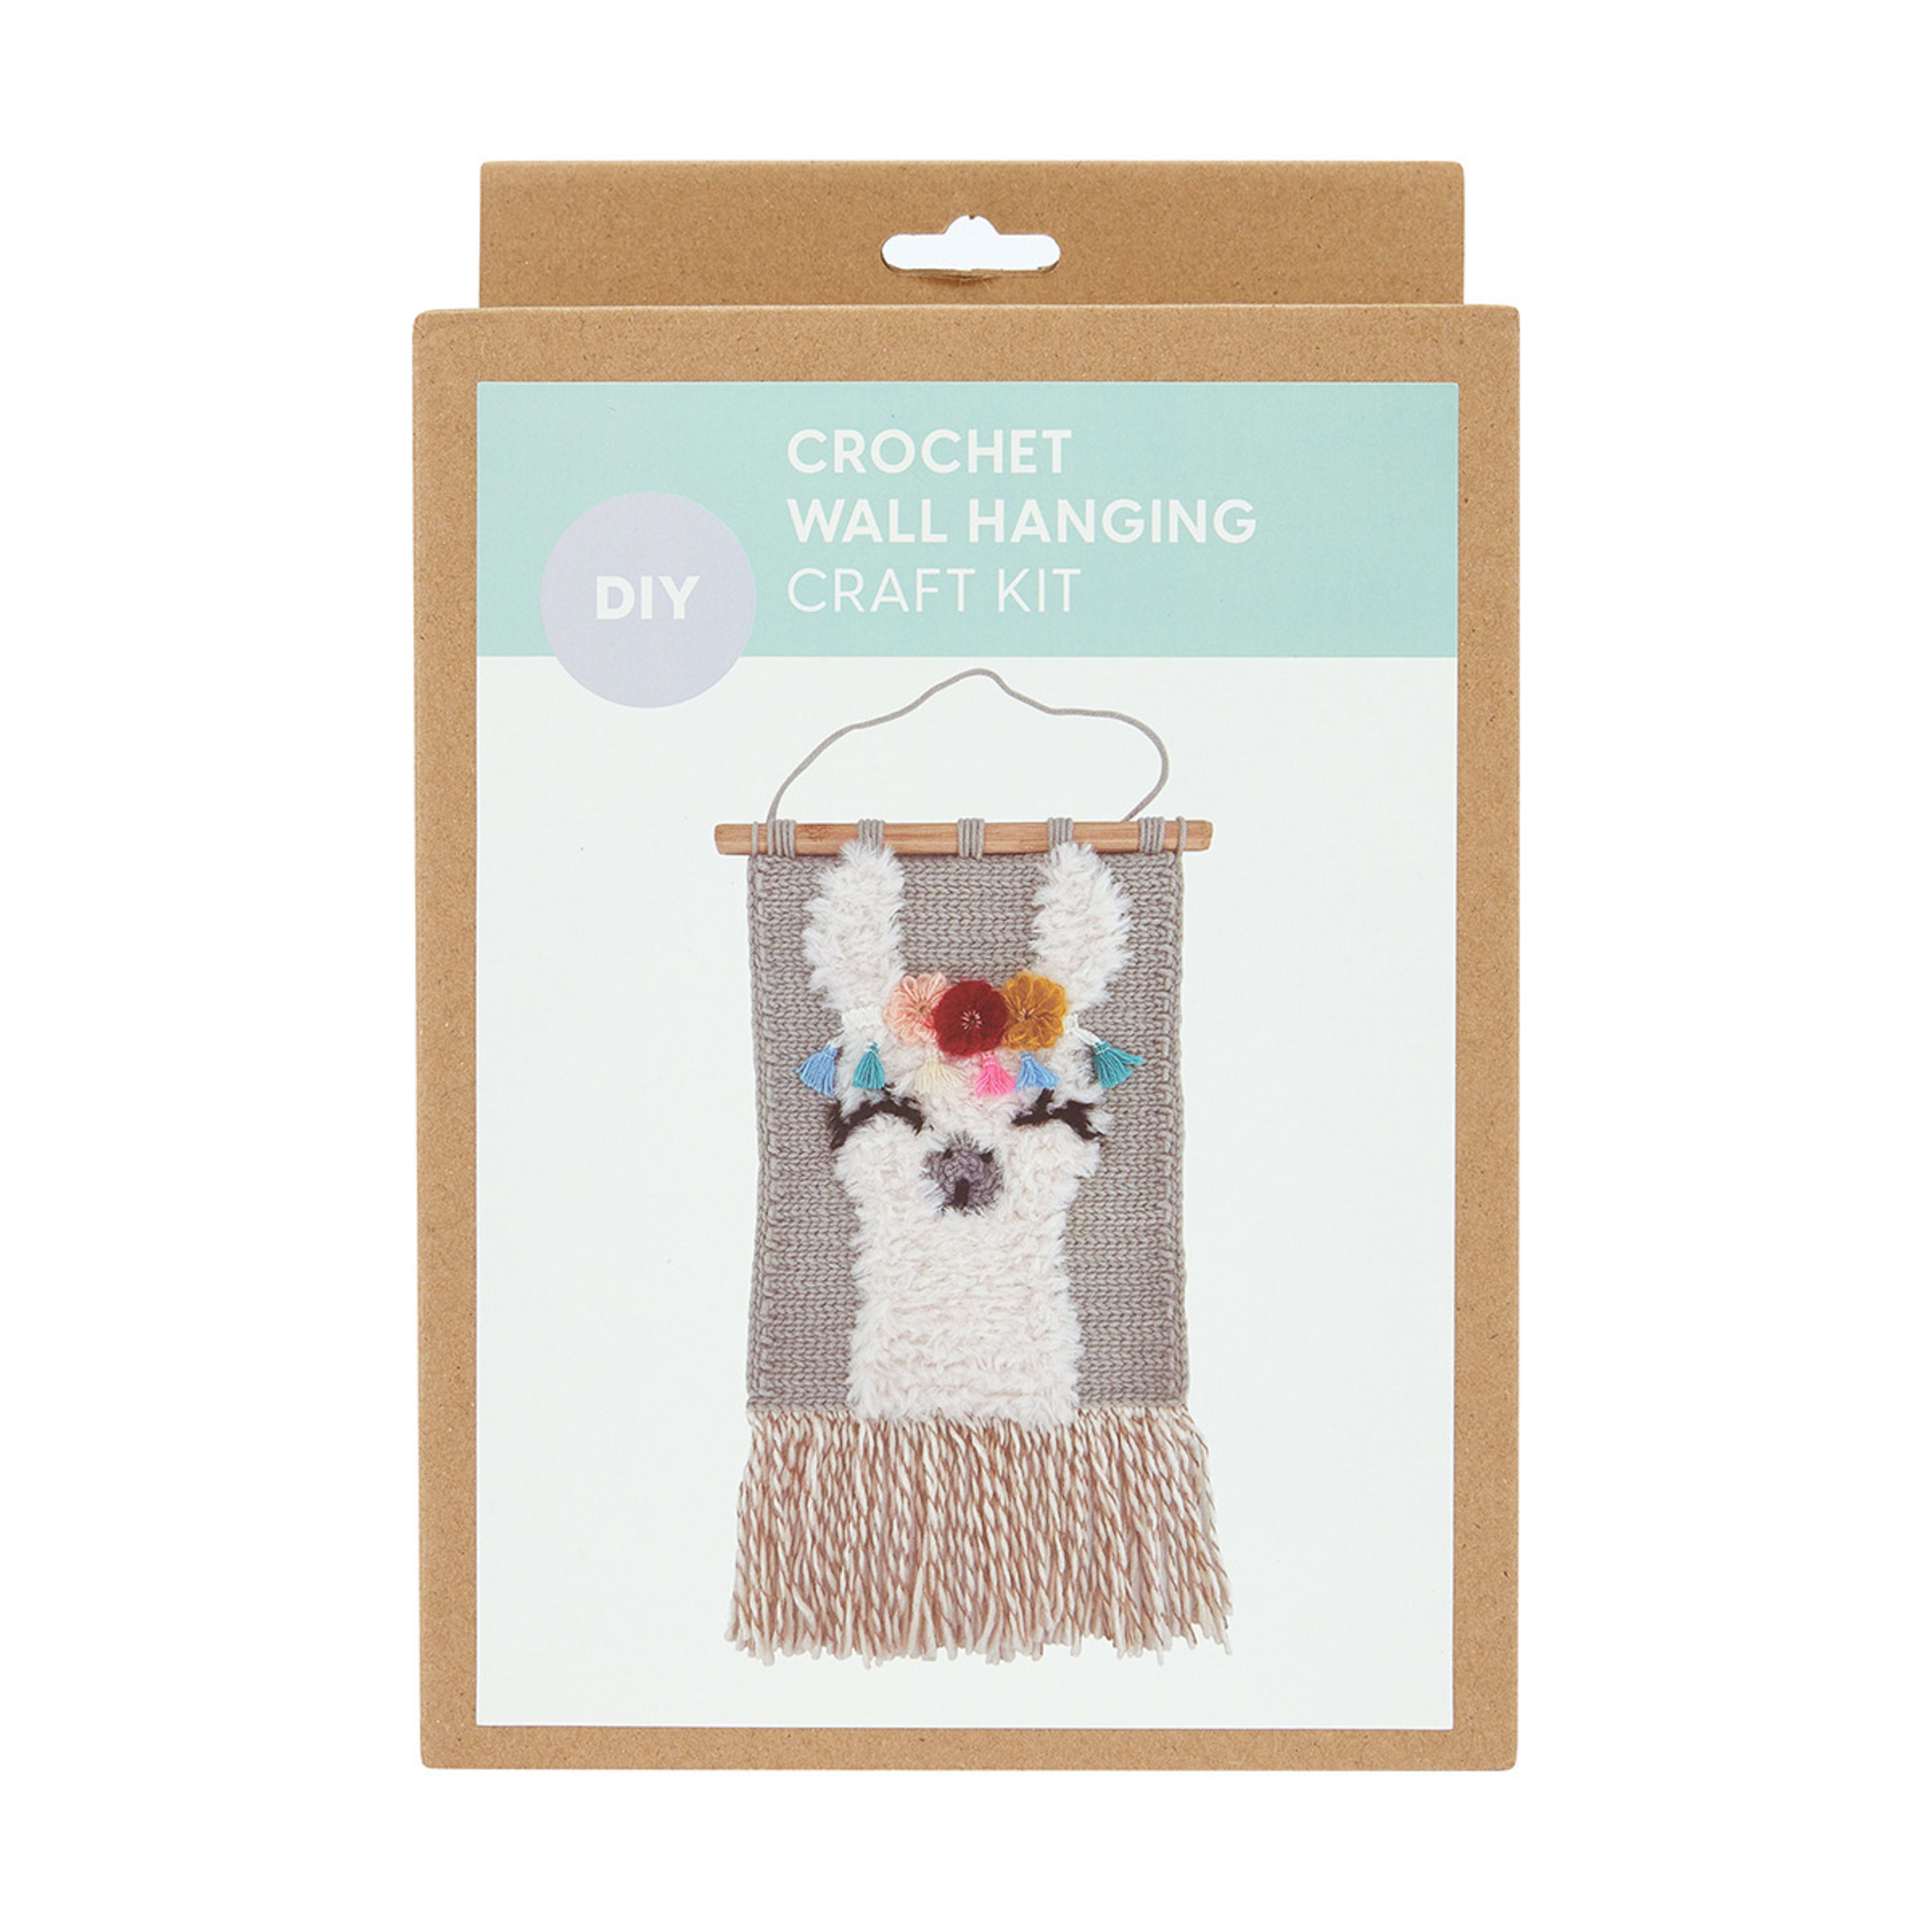 DIY Crochet Wall Hanging Craft Kit - Llama